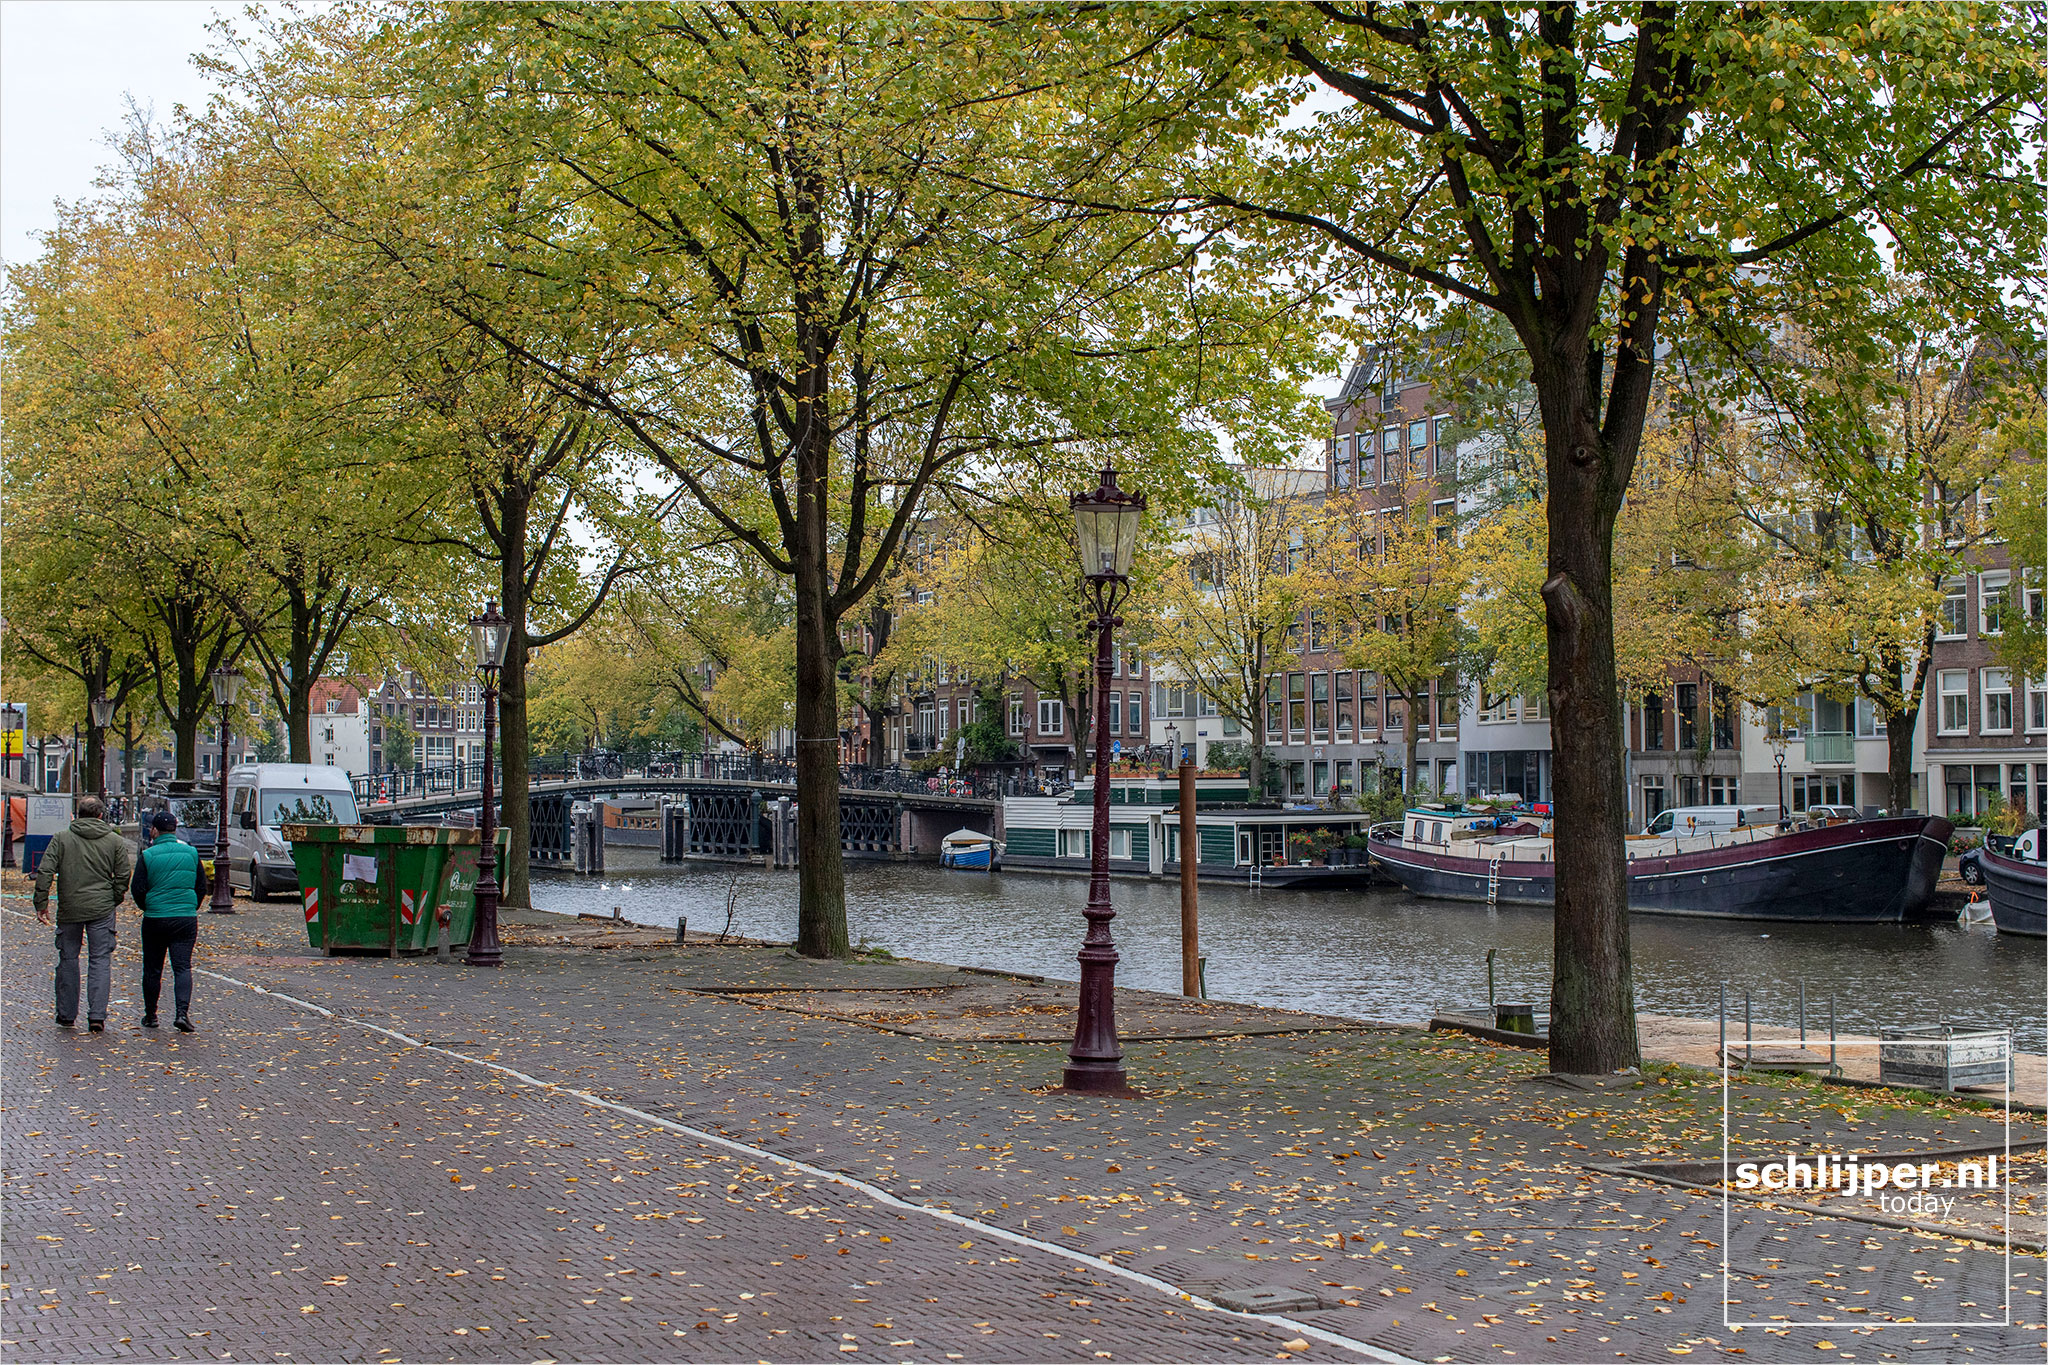 Nederland, Amsterdam, 20 oktober 2020